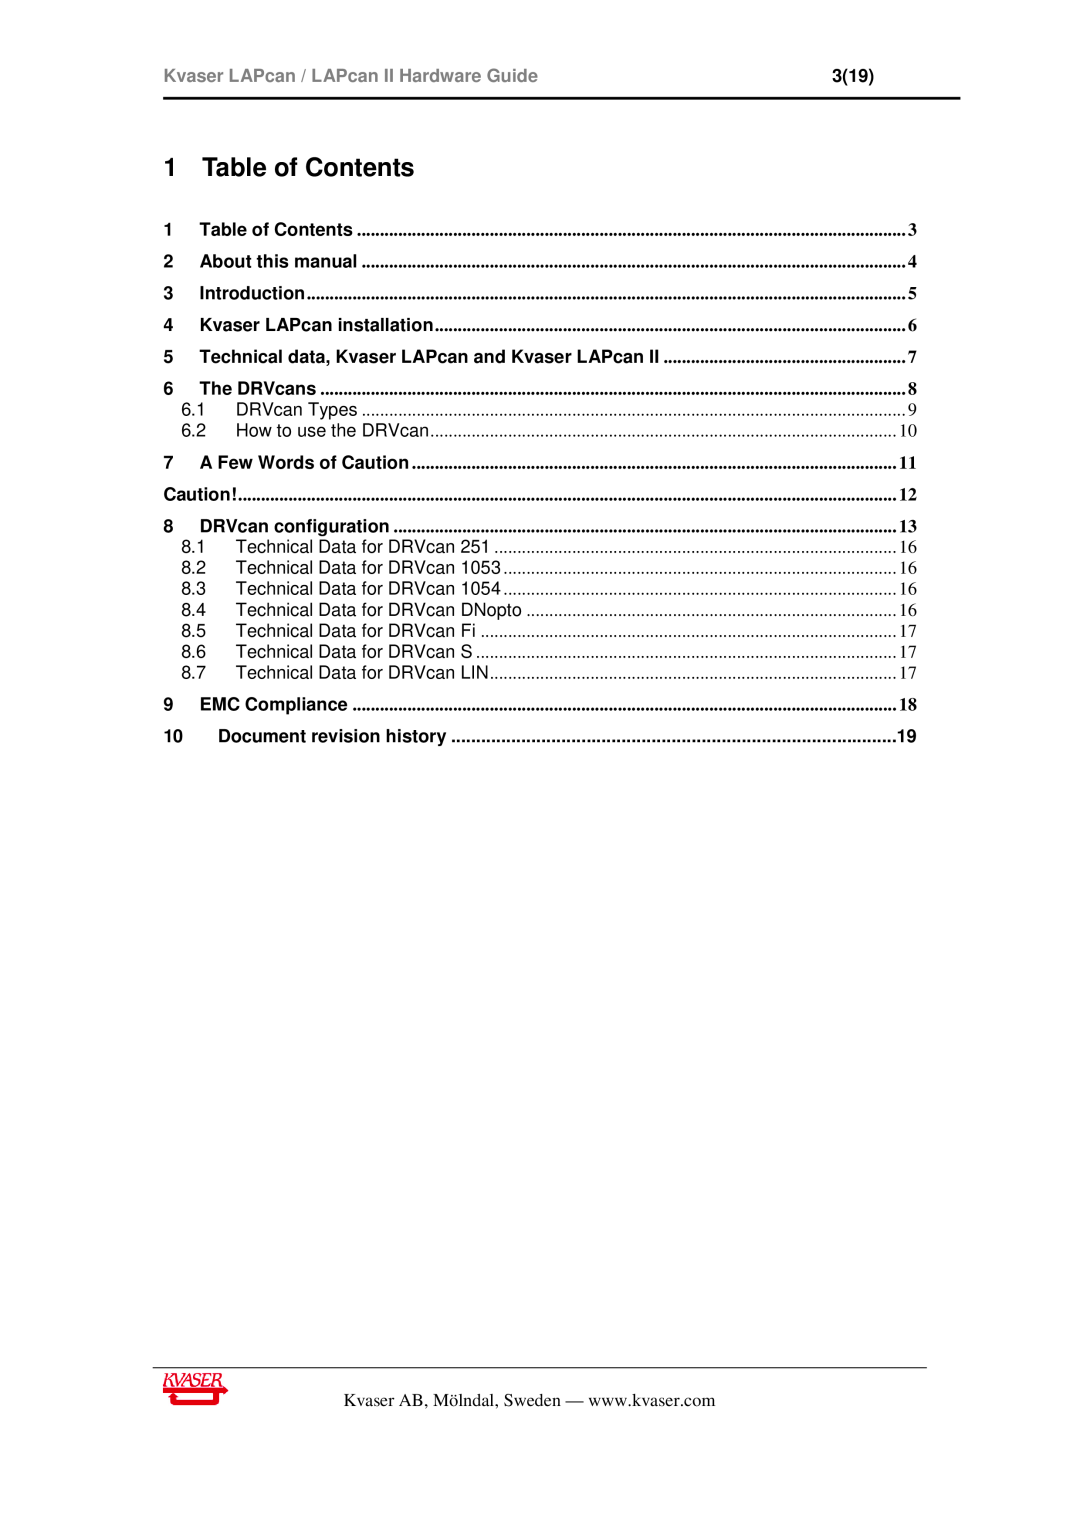 Philips Kvaser LAPcan II manual Table of Contents, Kvaser LAPcan / LAPcan II Hardware Guide 